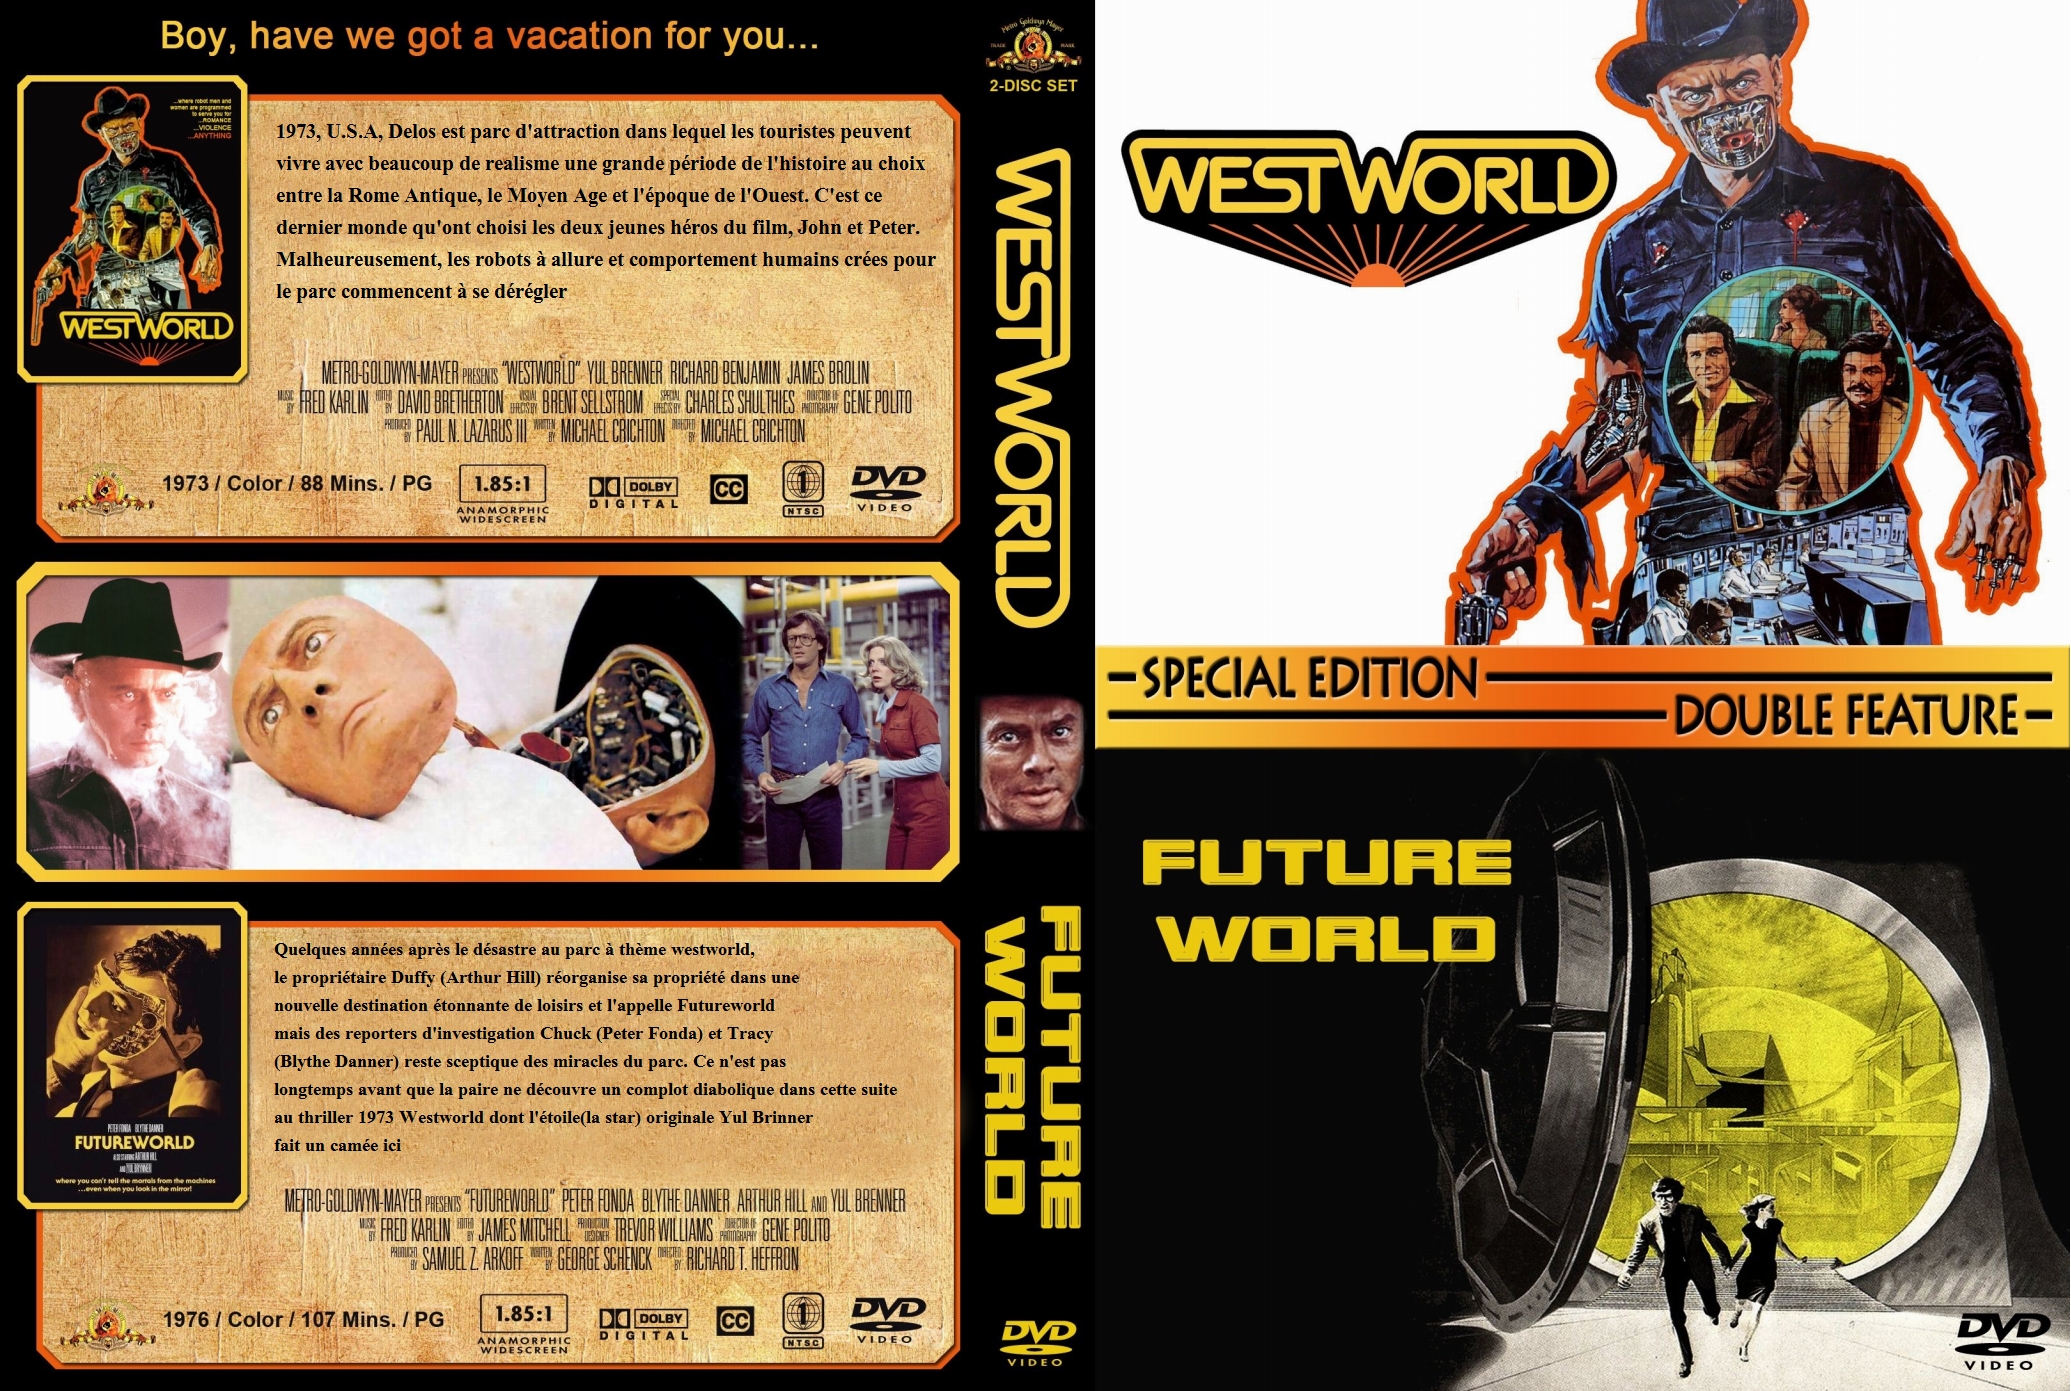 Jaquette DVD Westworld - Futureworld custom